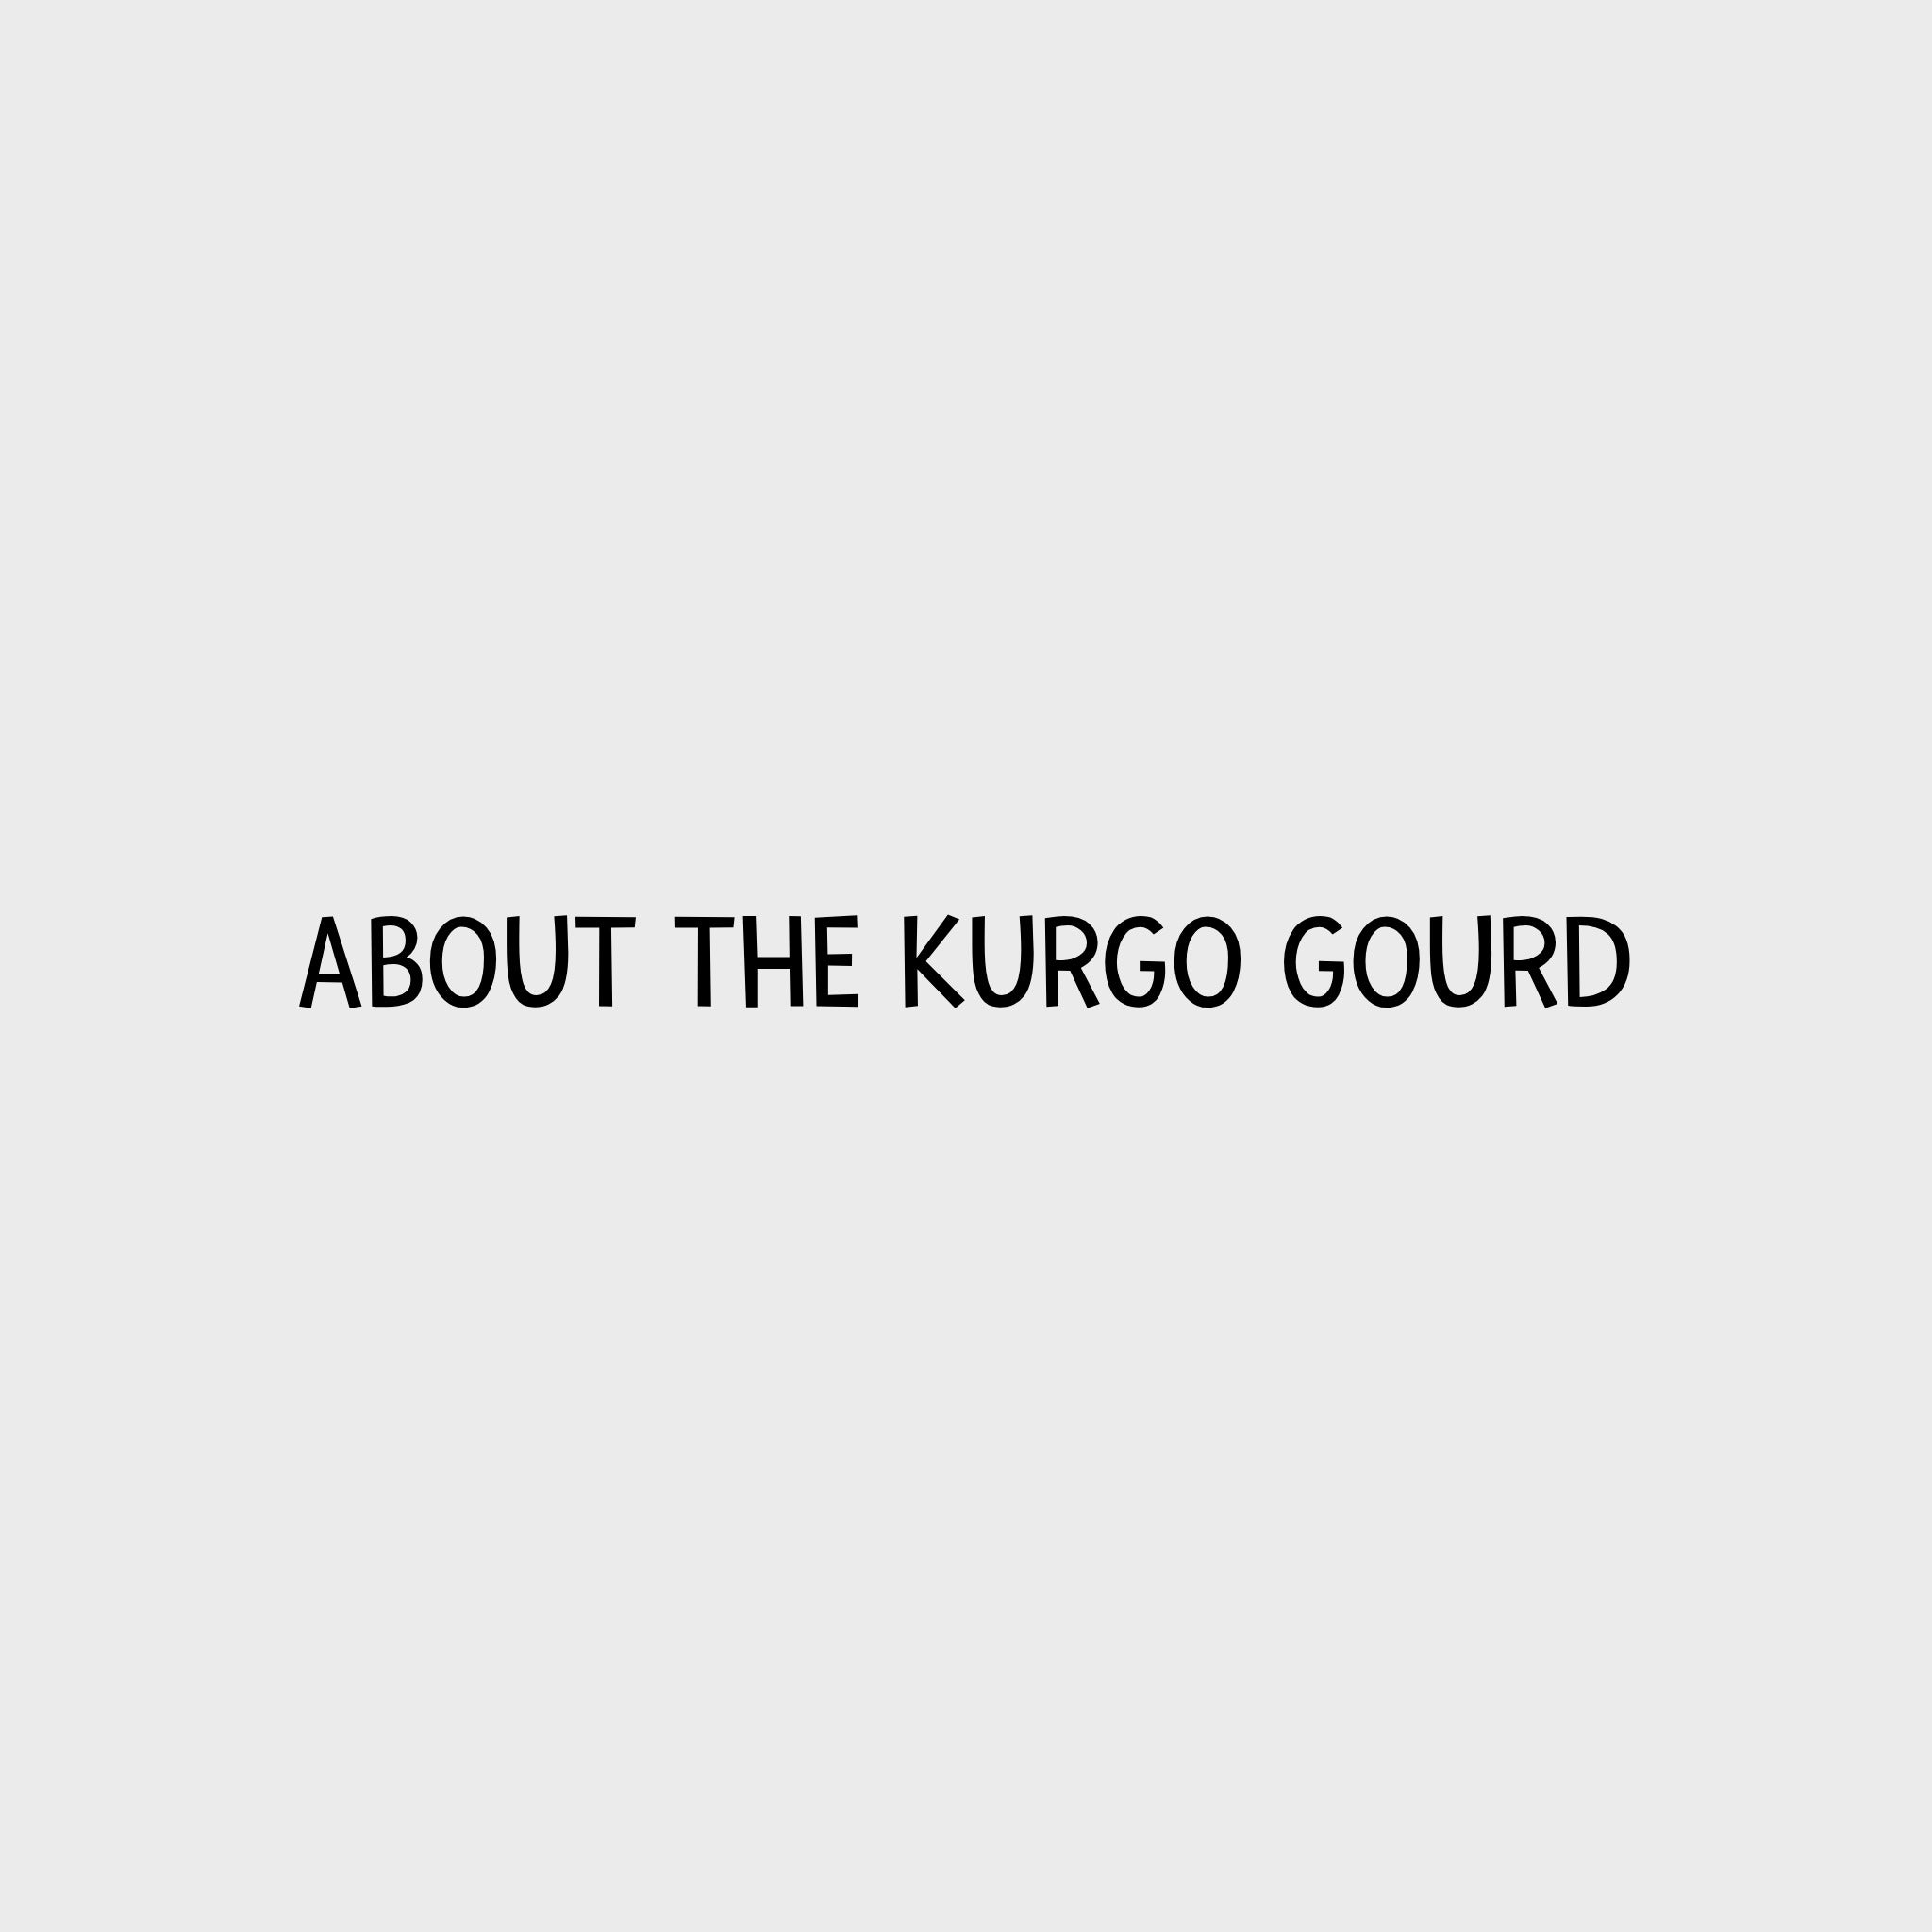 Video - Kurgo Gourd